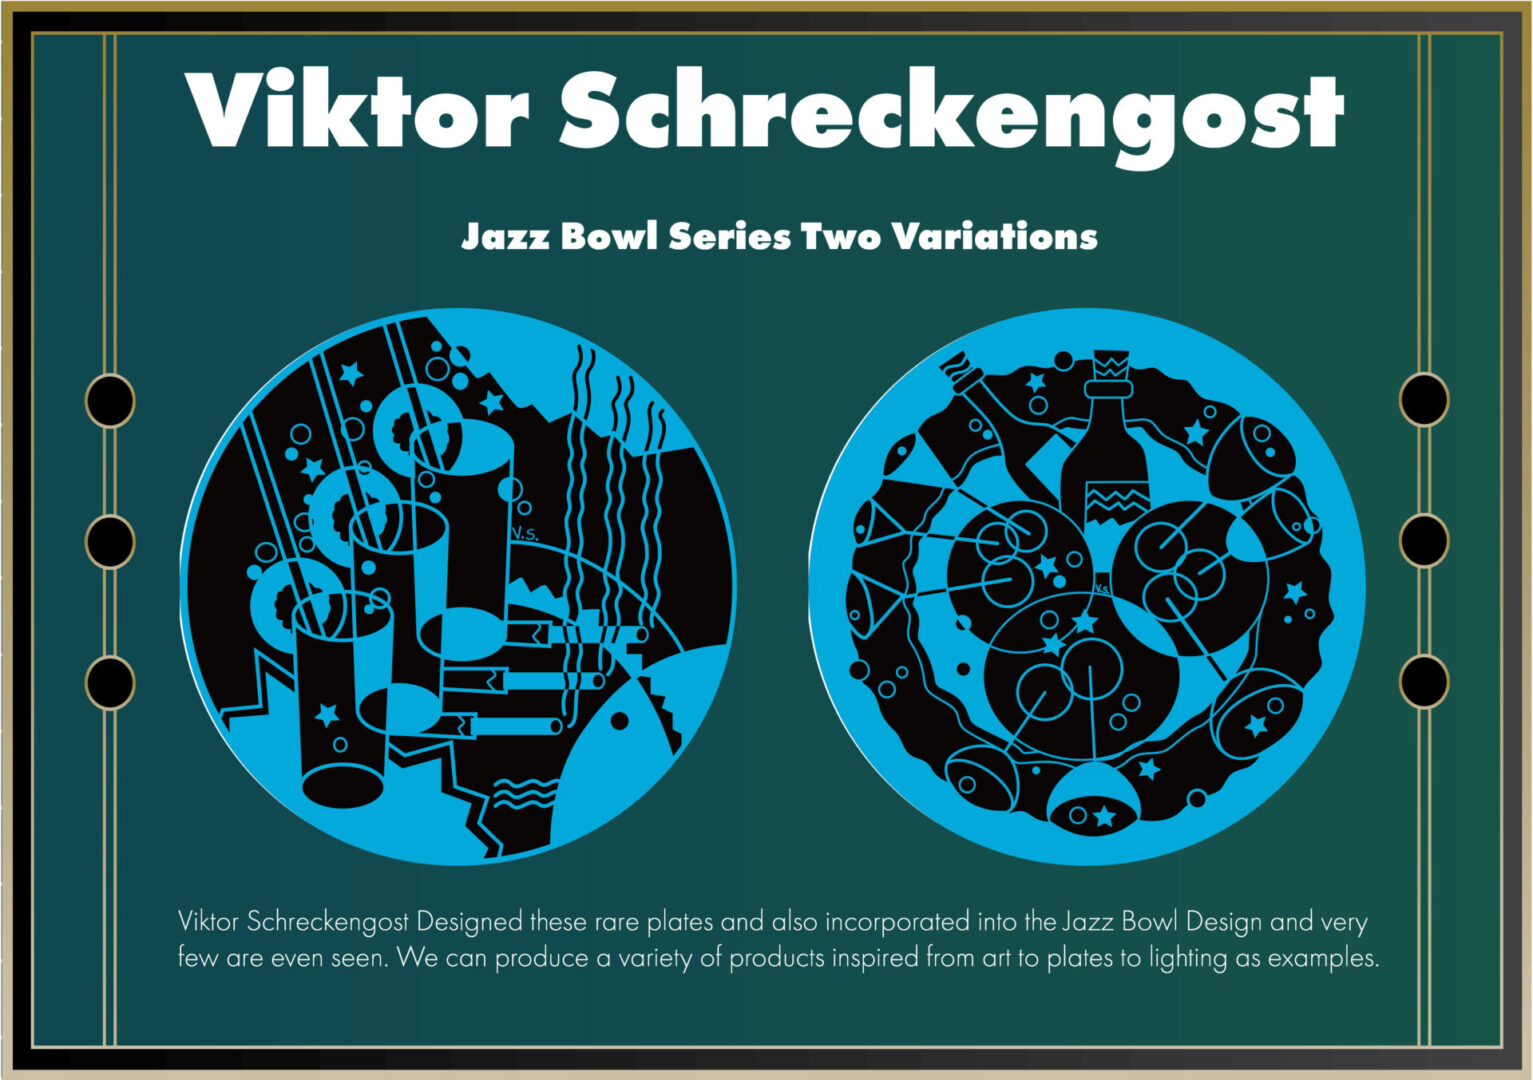 Jazz Bowl series two variations by Viktor Schreckengost